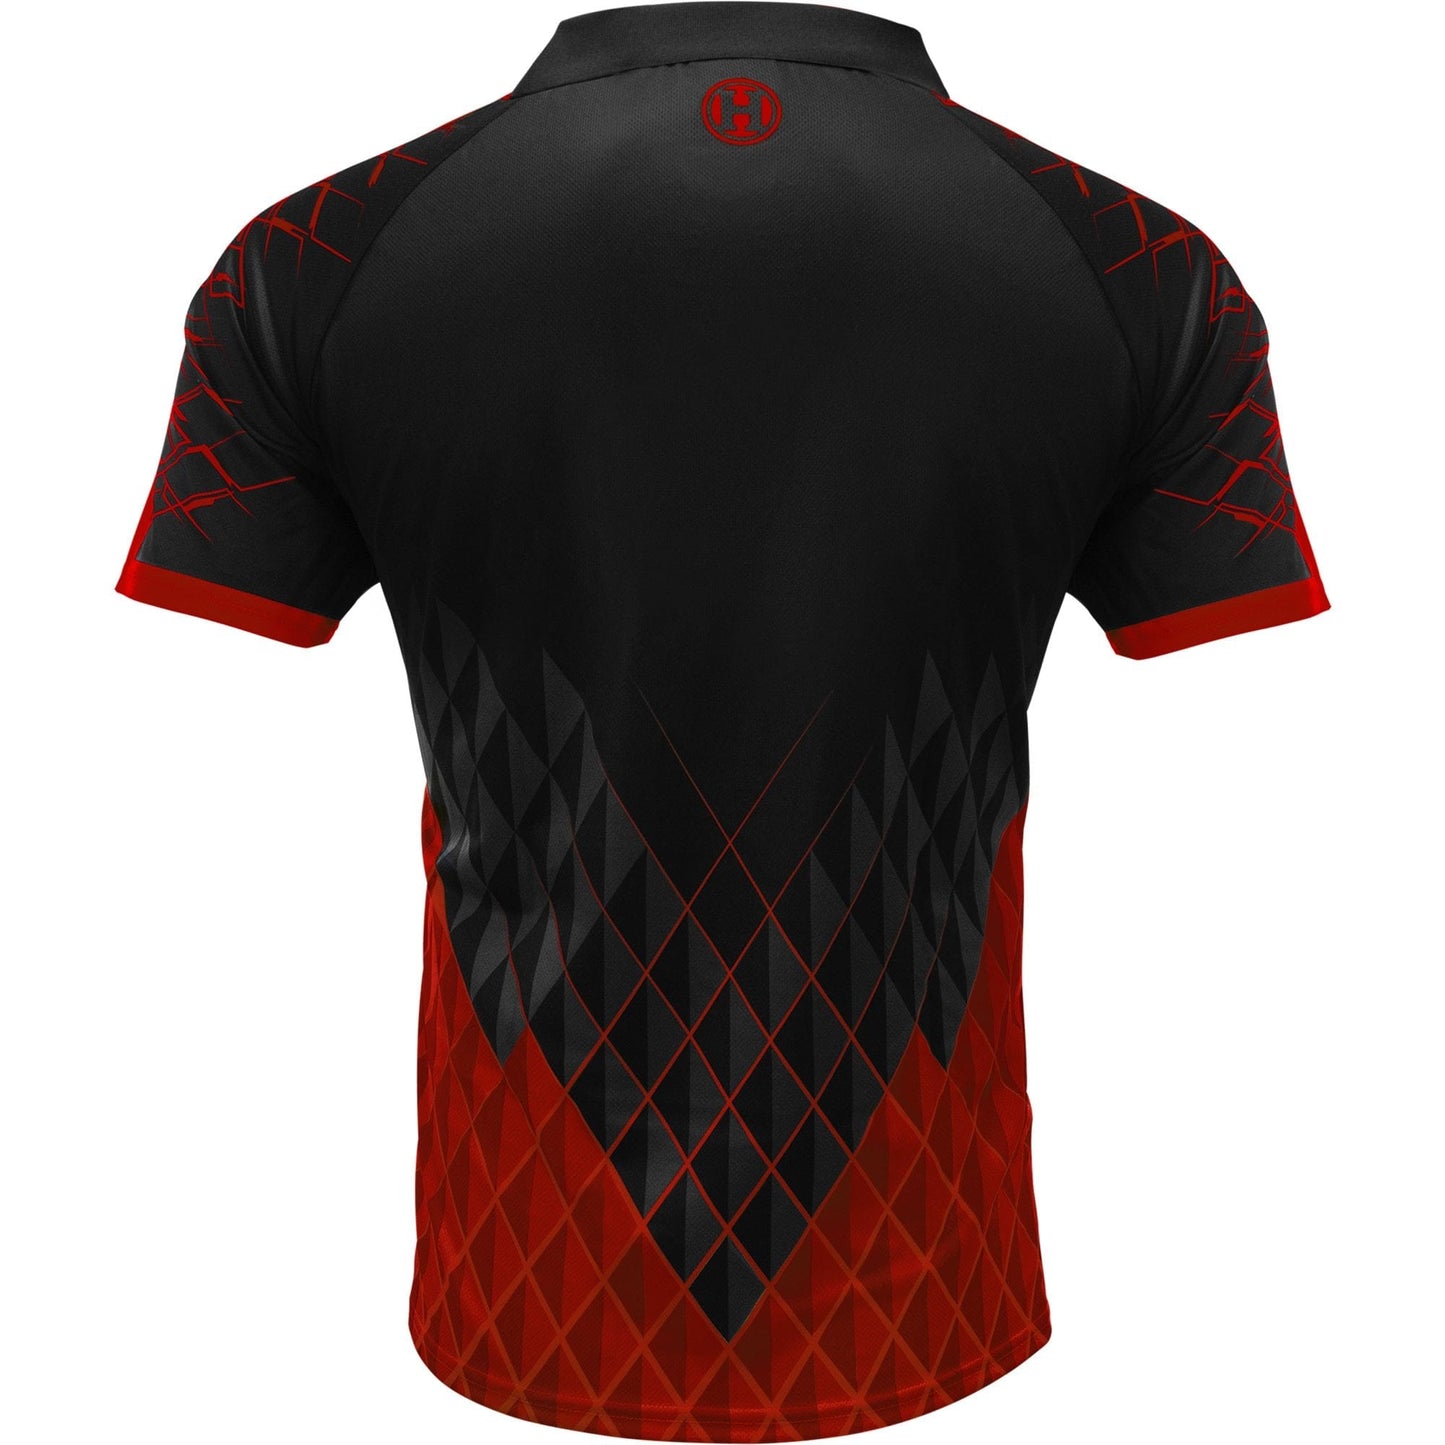 Harrows Paragon Dart Shirt - with Pocket - Black & Red